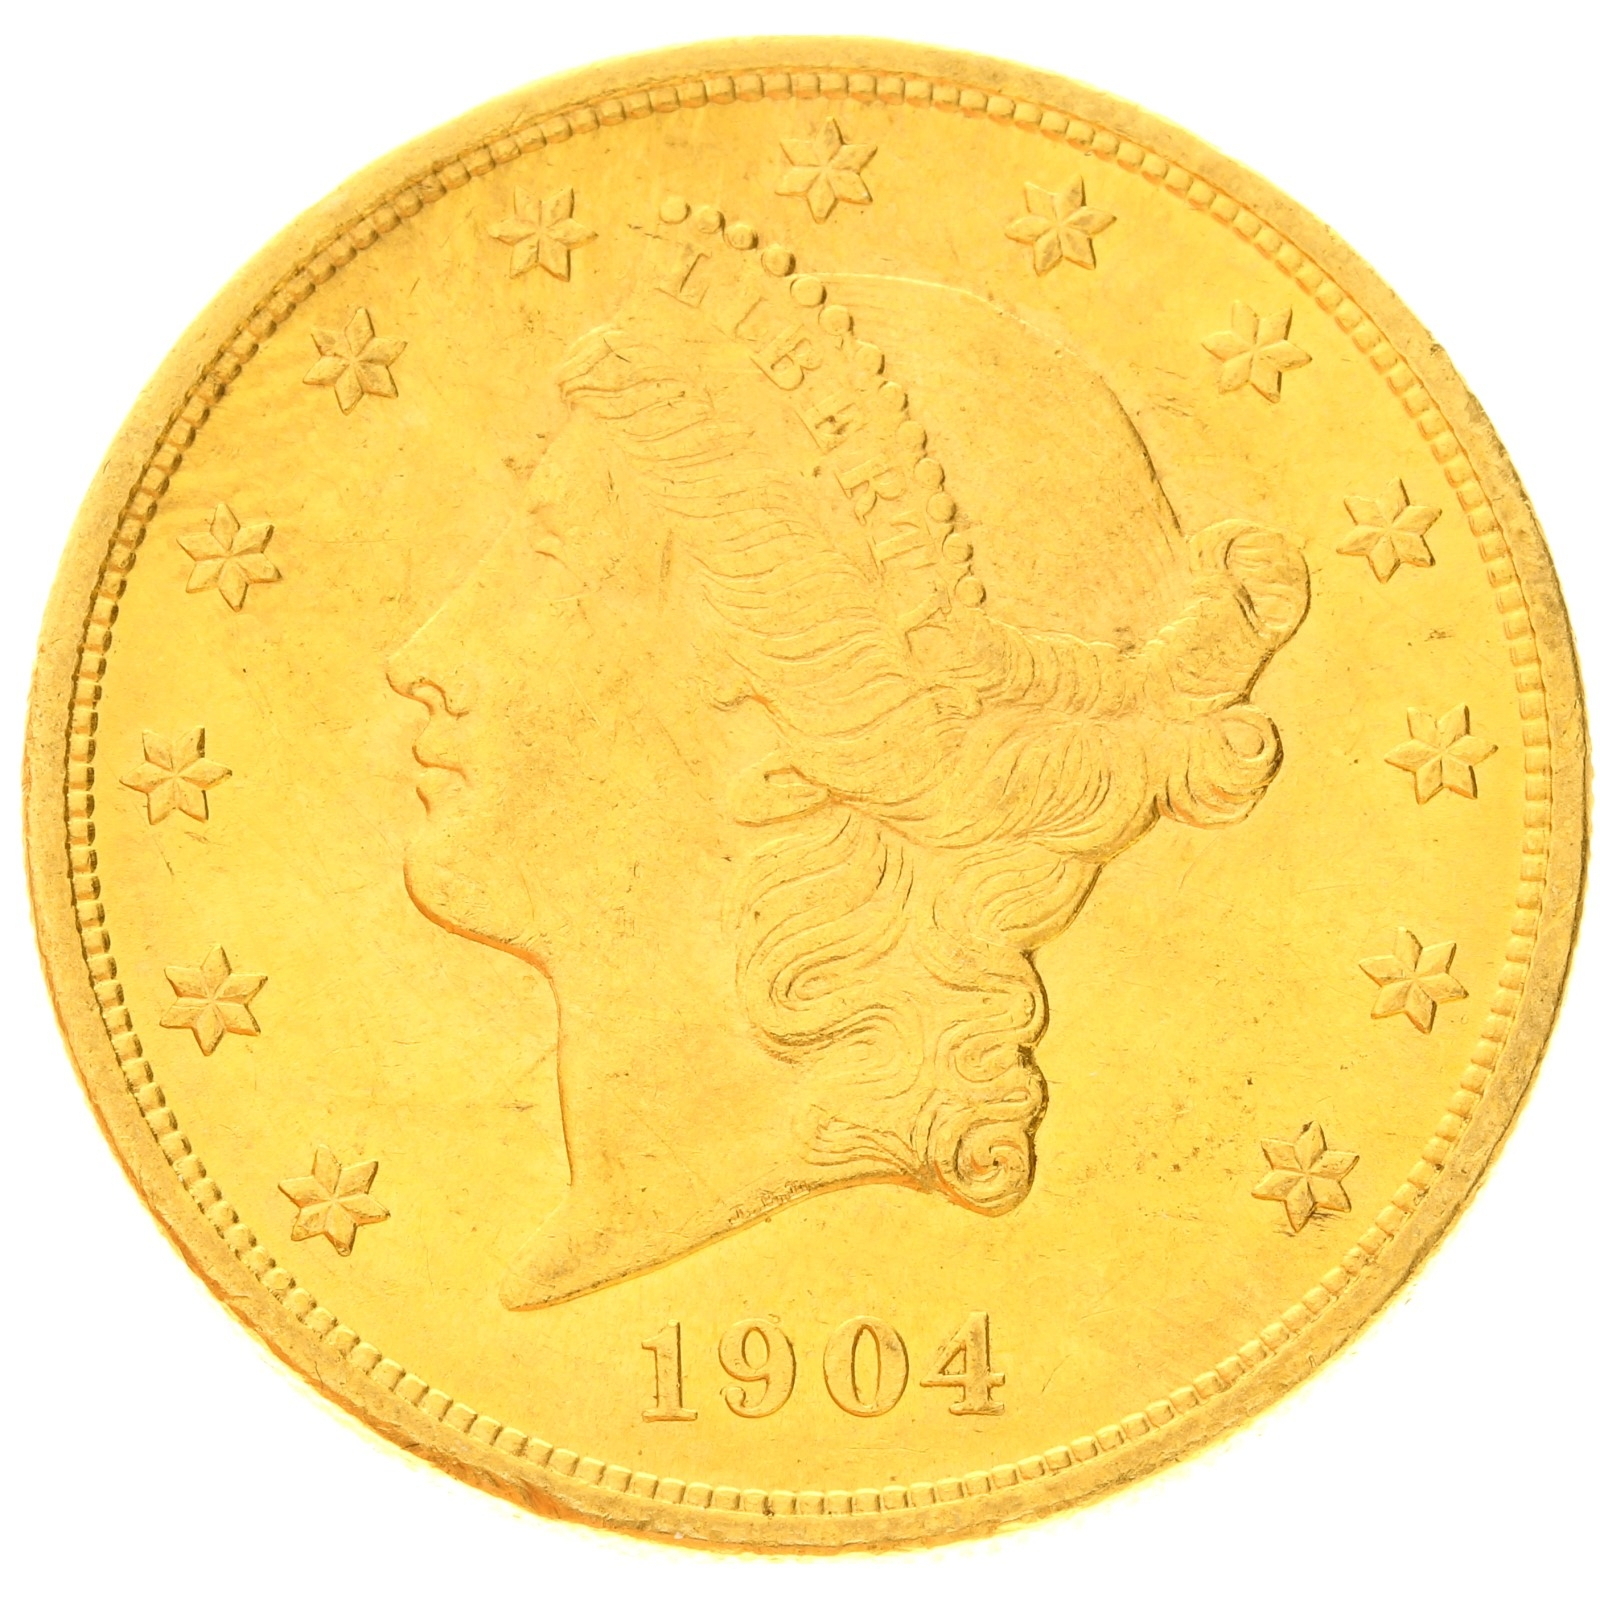 USA - 20 dollars - 1904 - Liberty Head